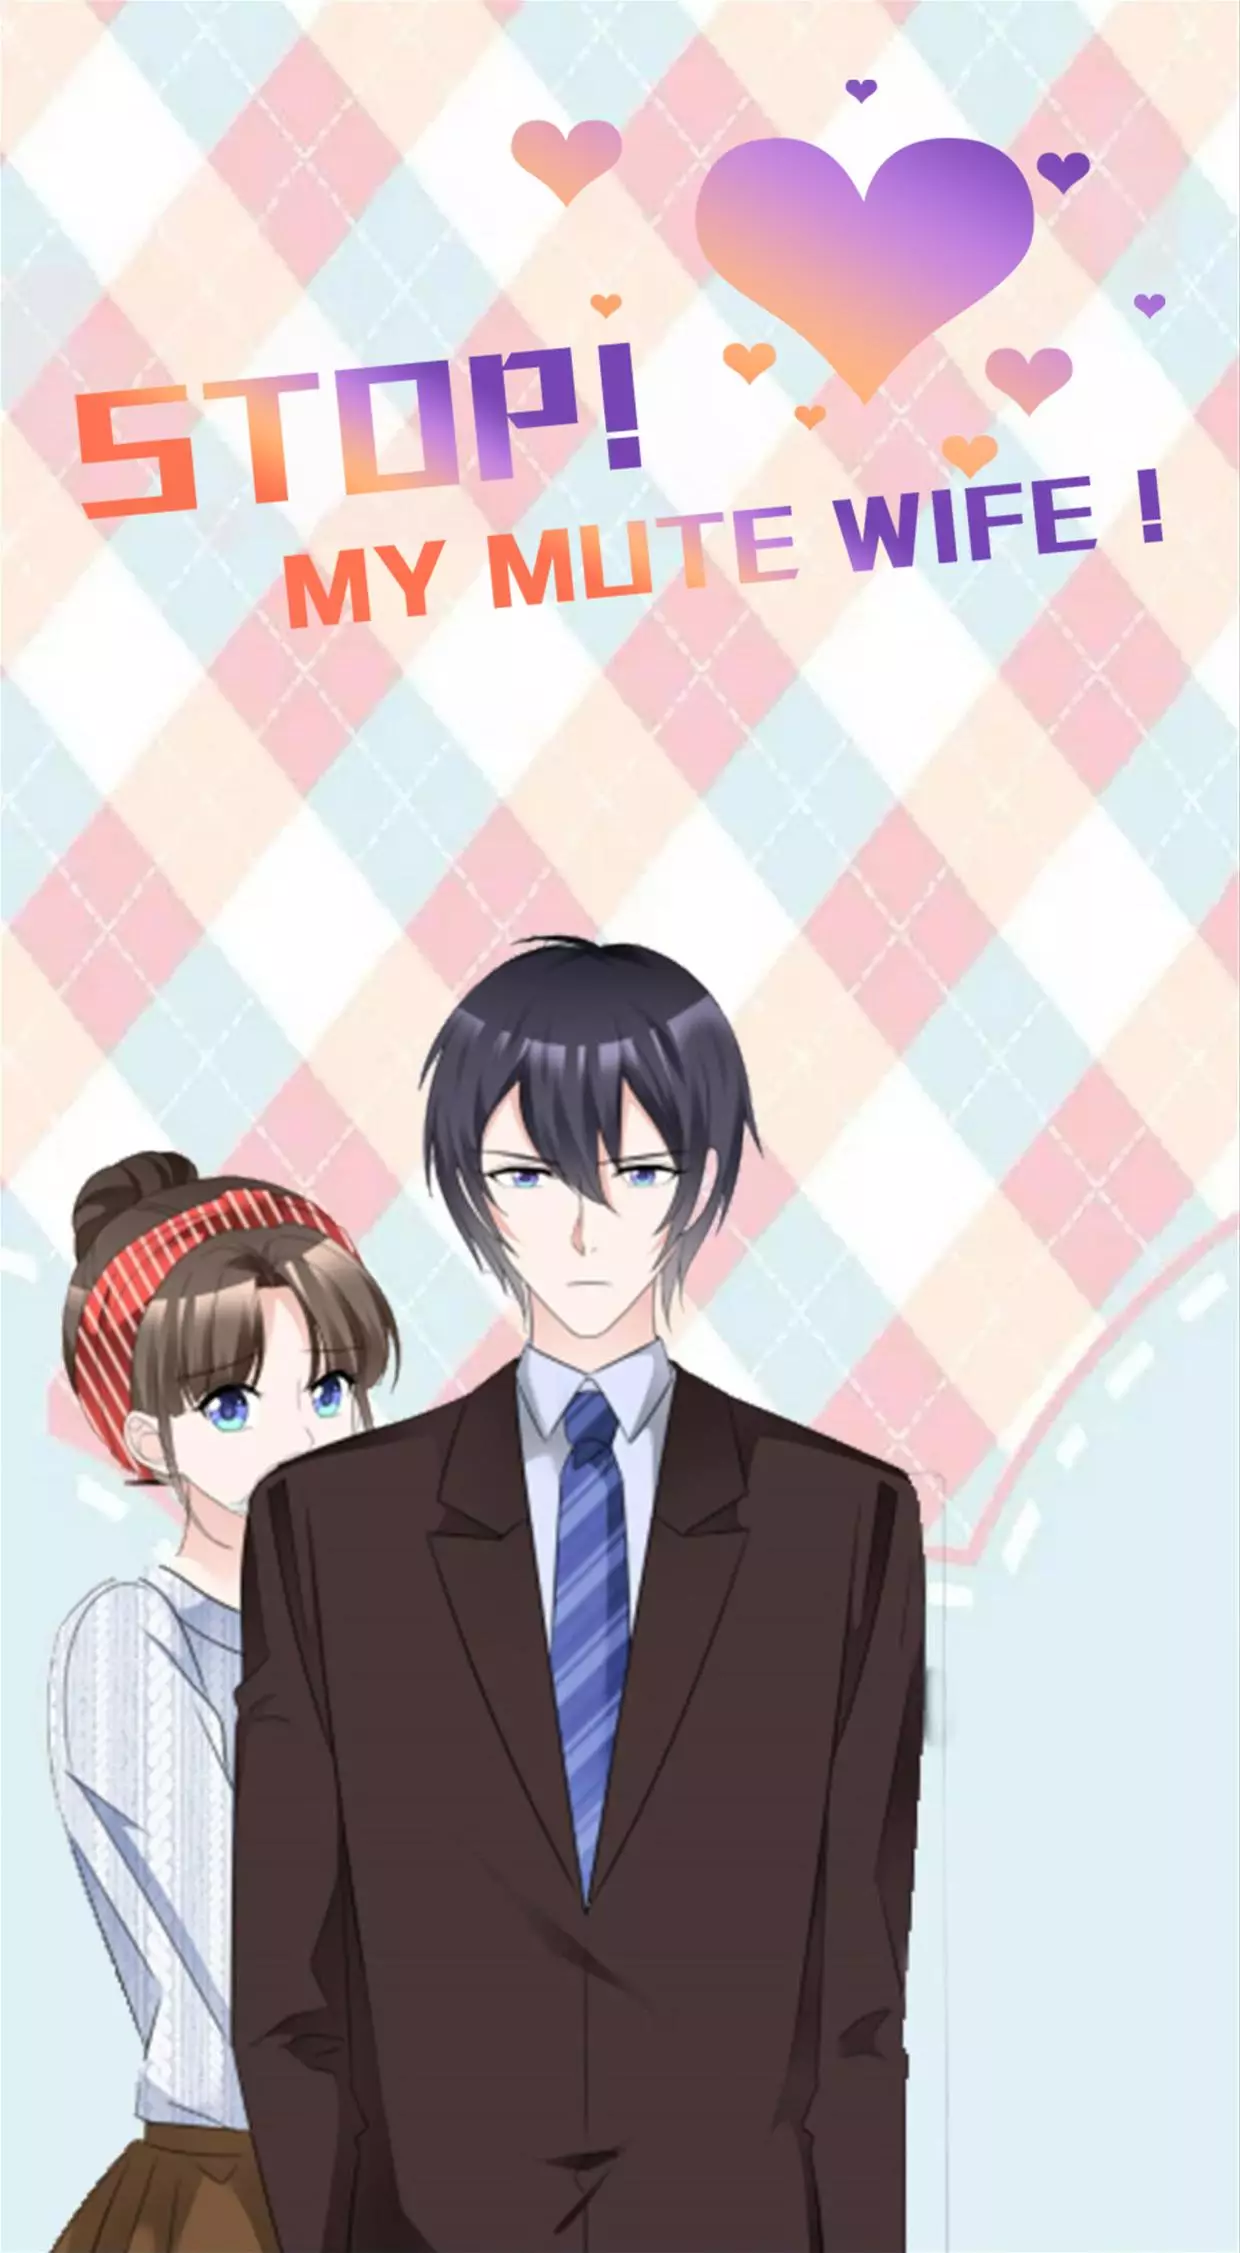 Stop, My Mute Wife! - 39 page 1-7ebcddba